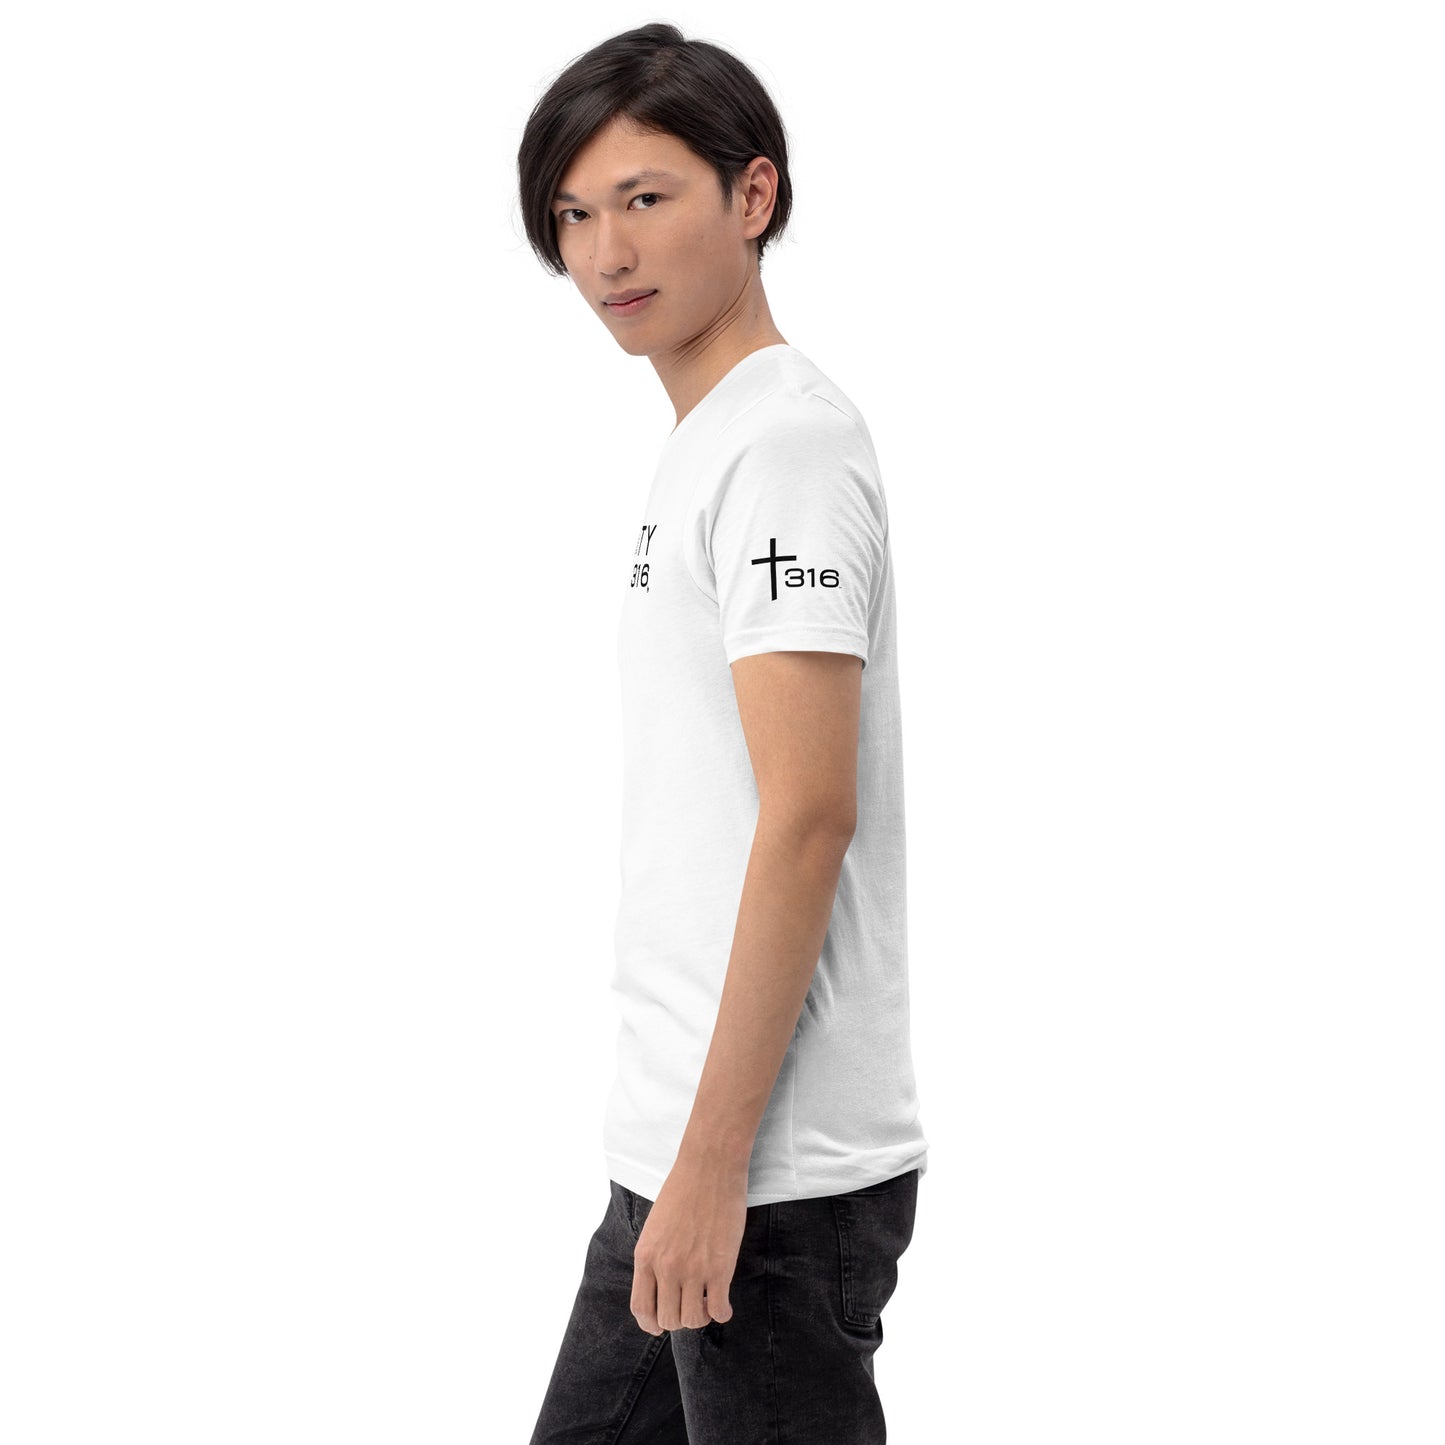 Trinity 316 T-Shirt - White